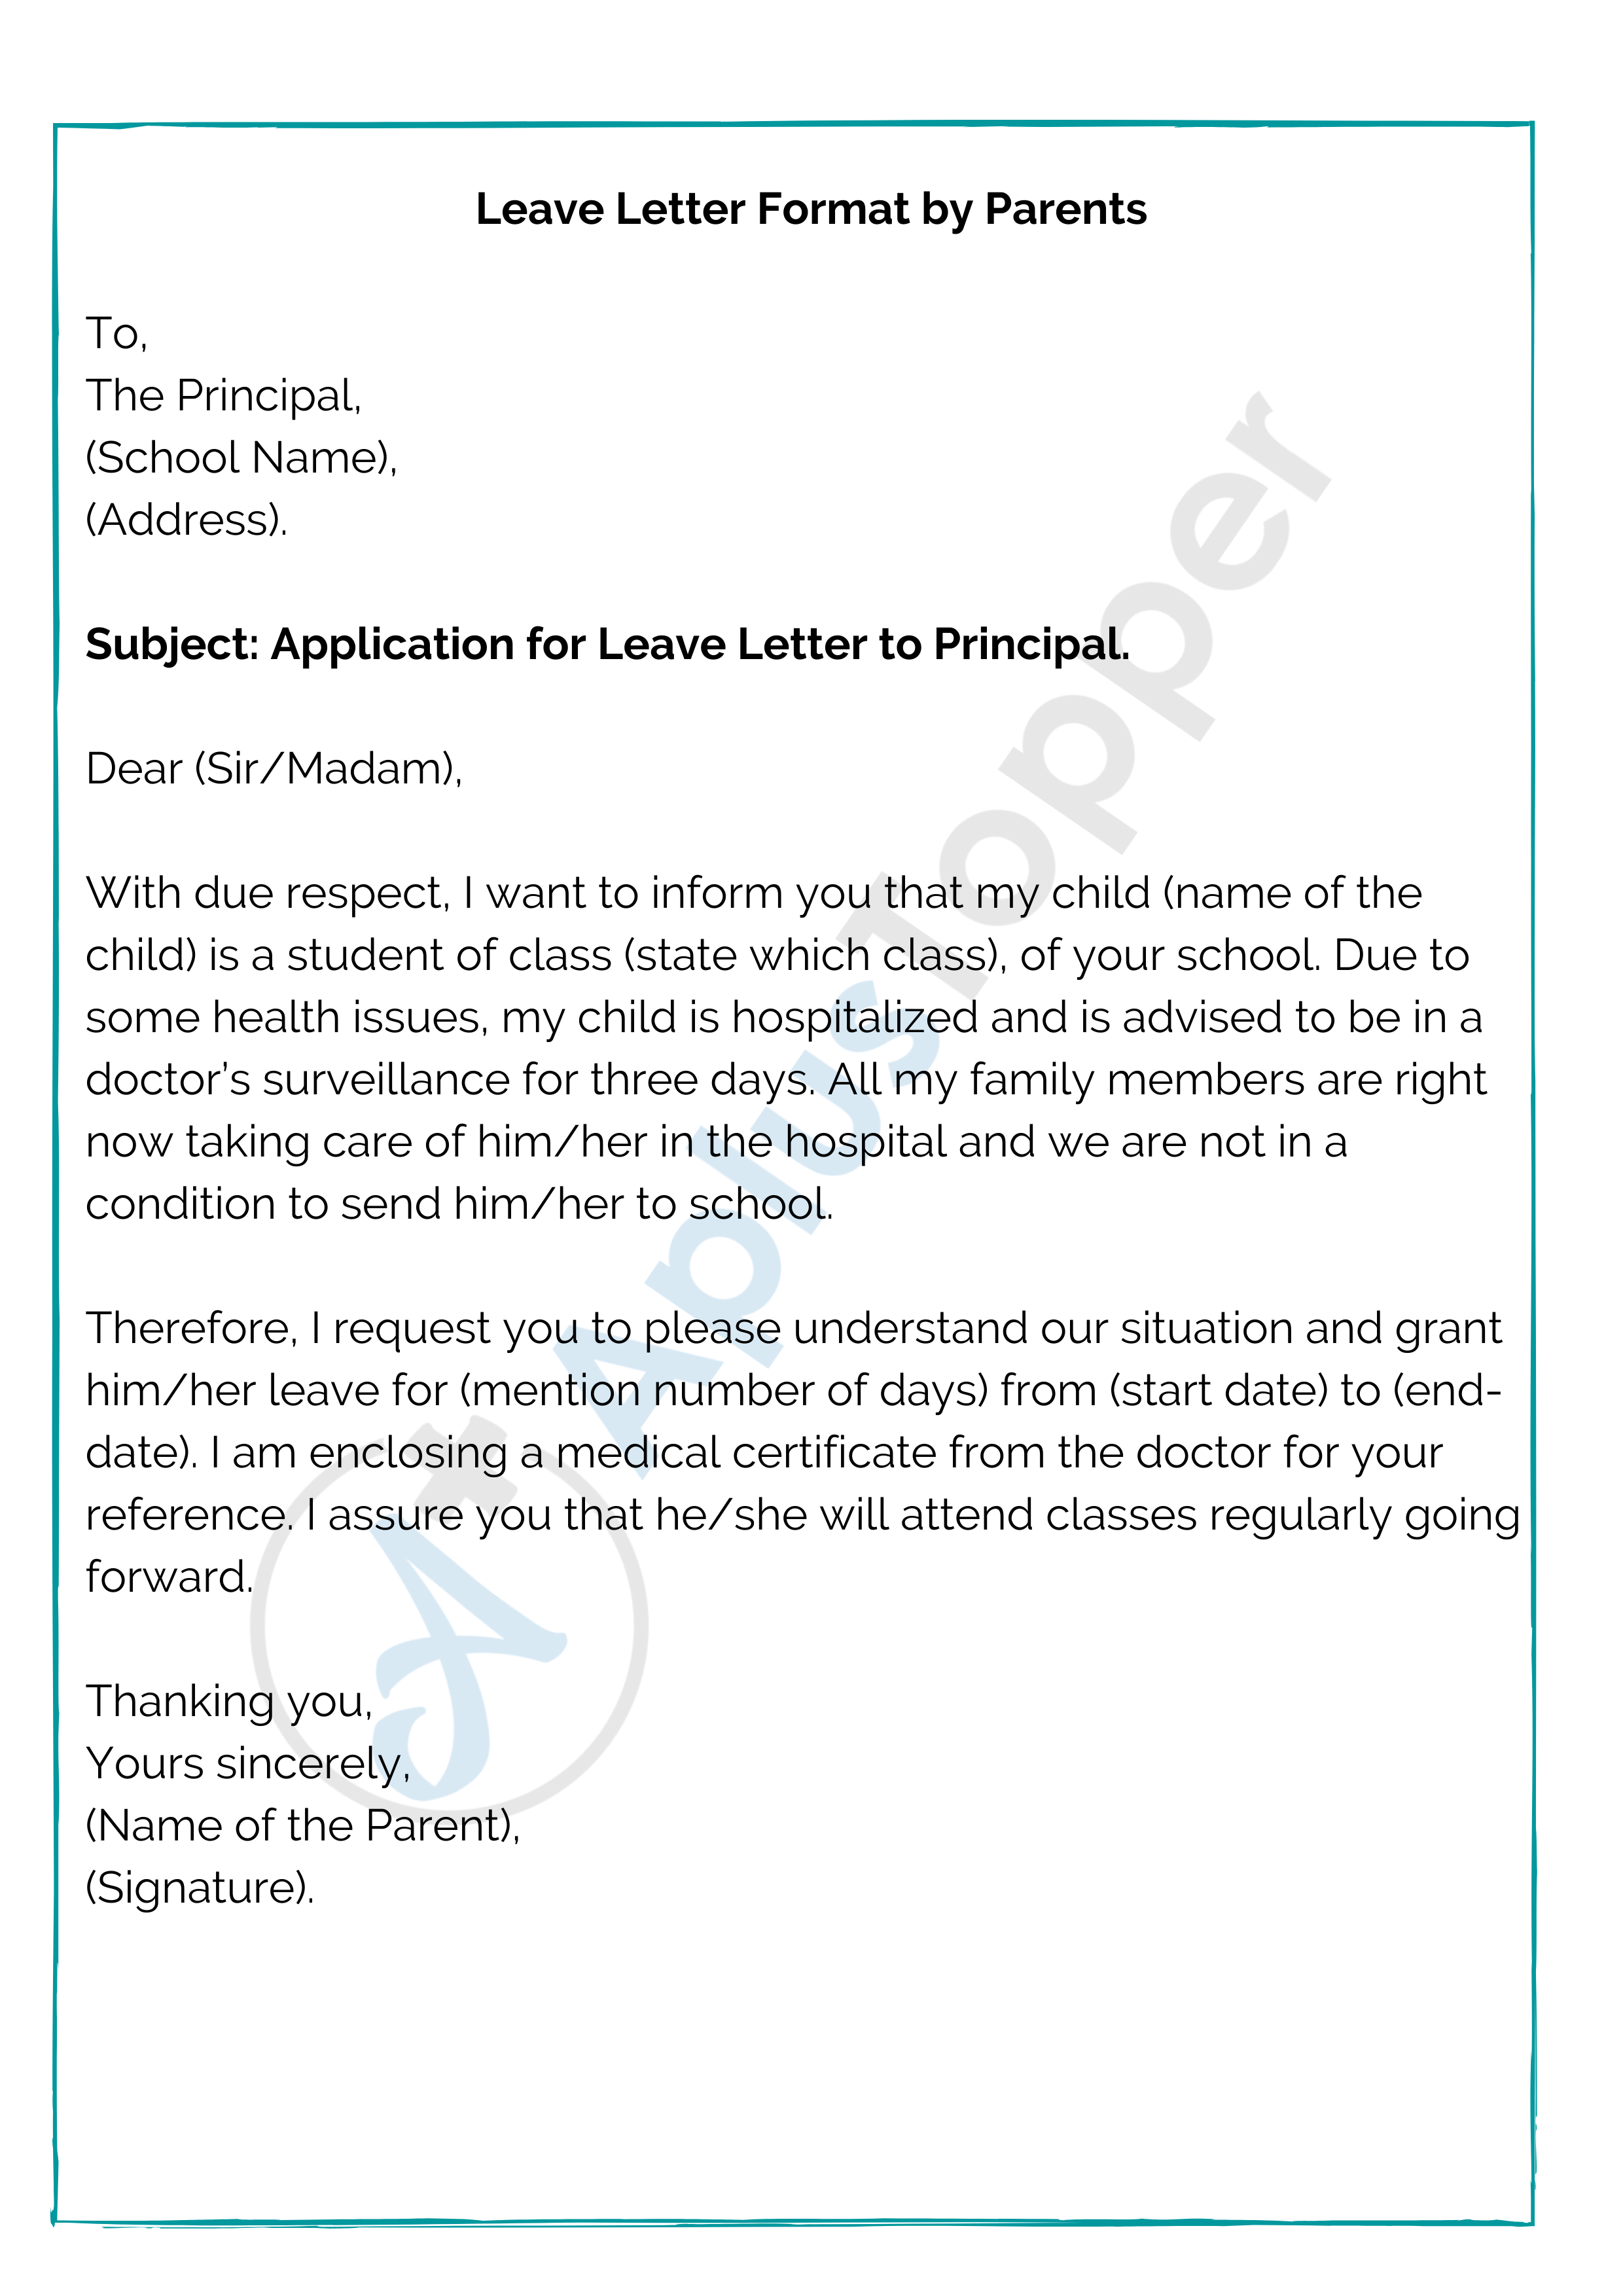 Leave Letter Format By Parents